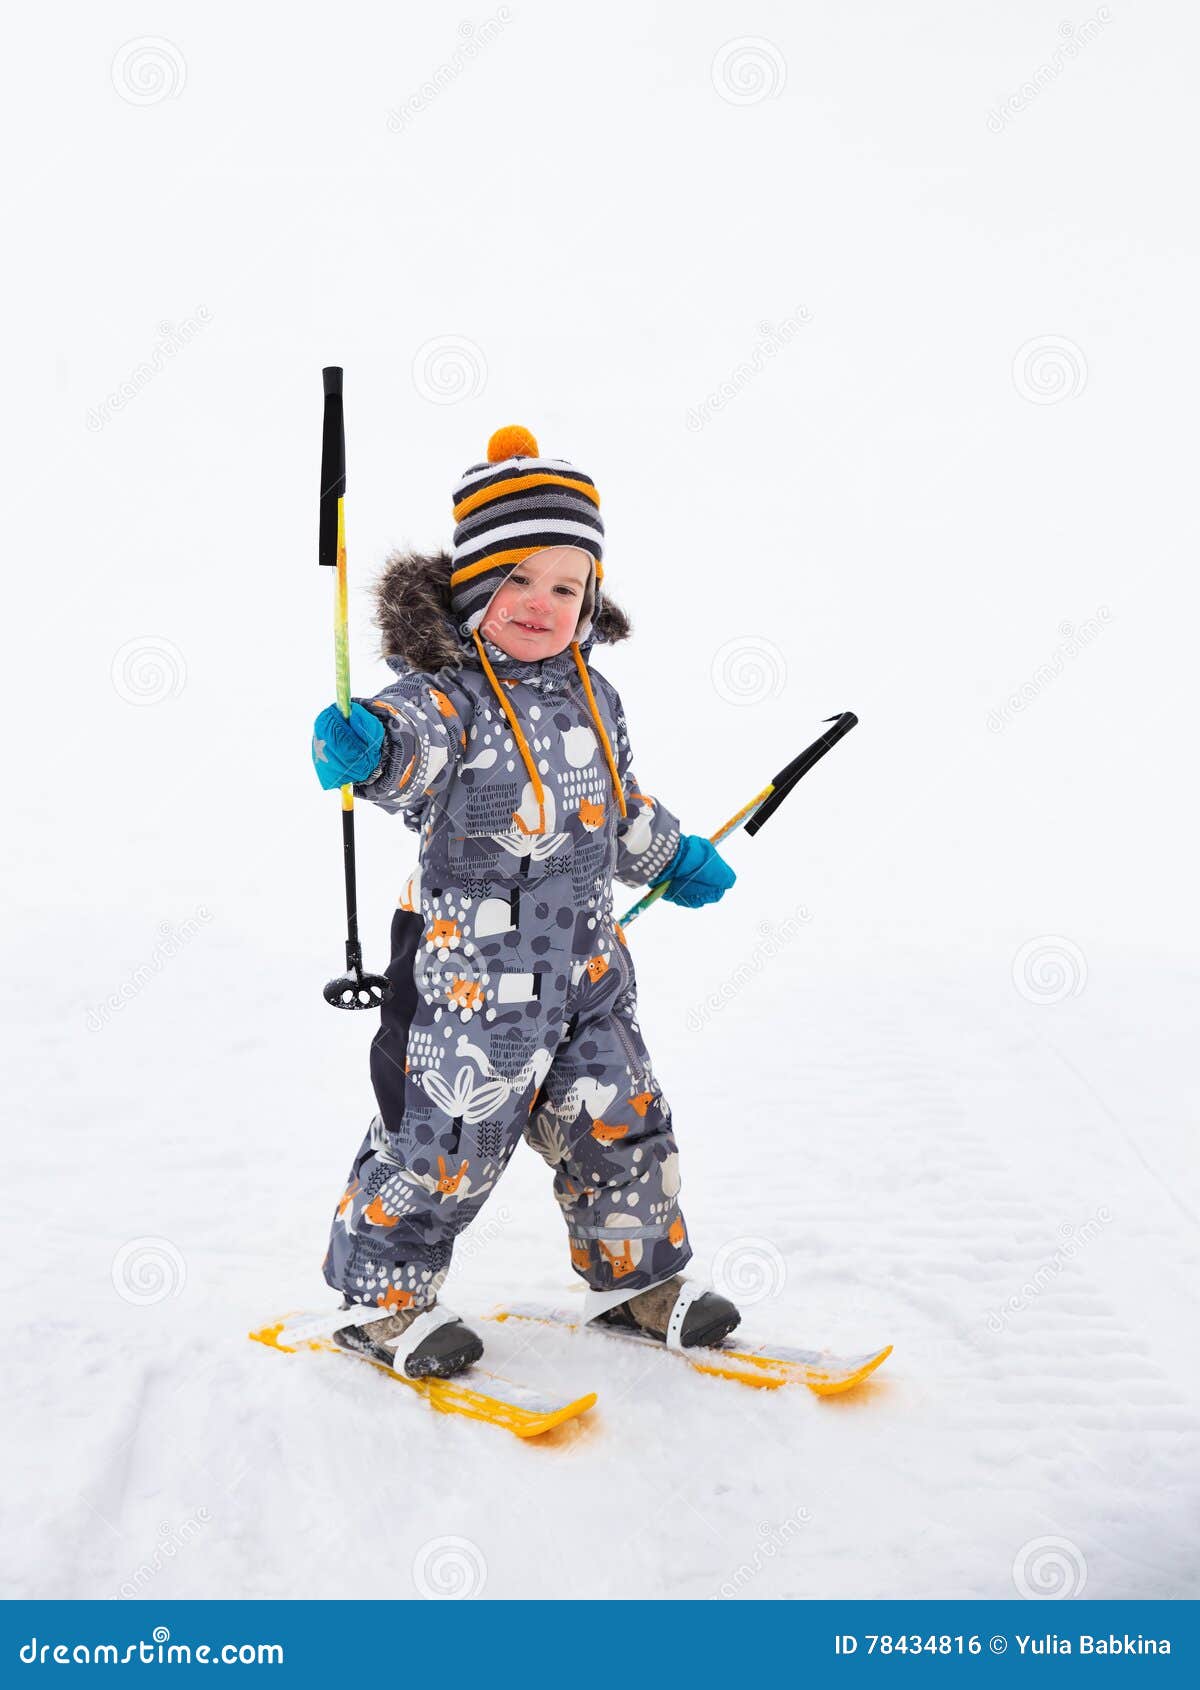 SIKA SNOW儿童滑雪装备助力雪山宝贝玩转冰雪新年！